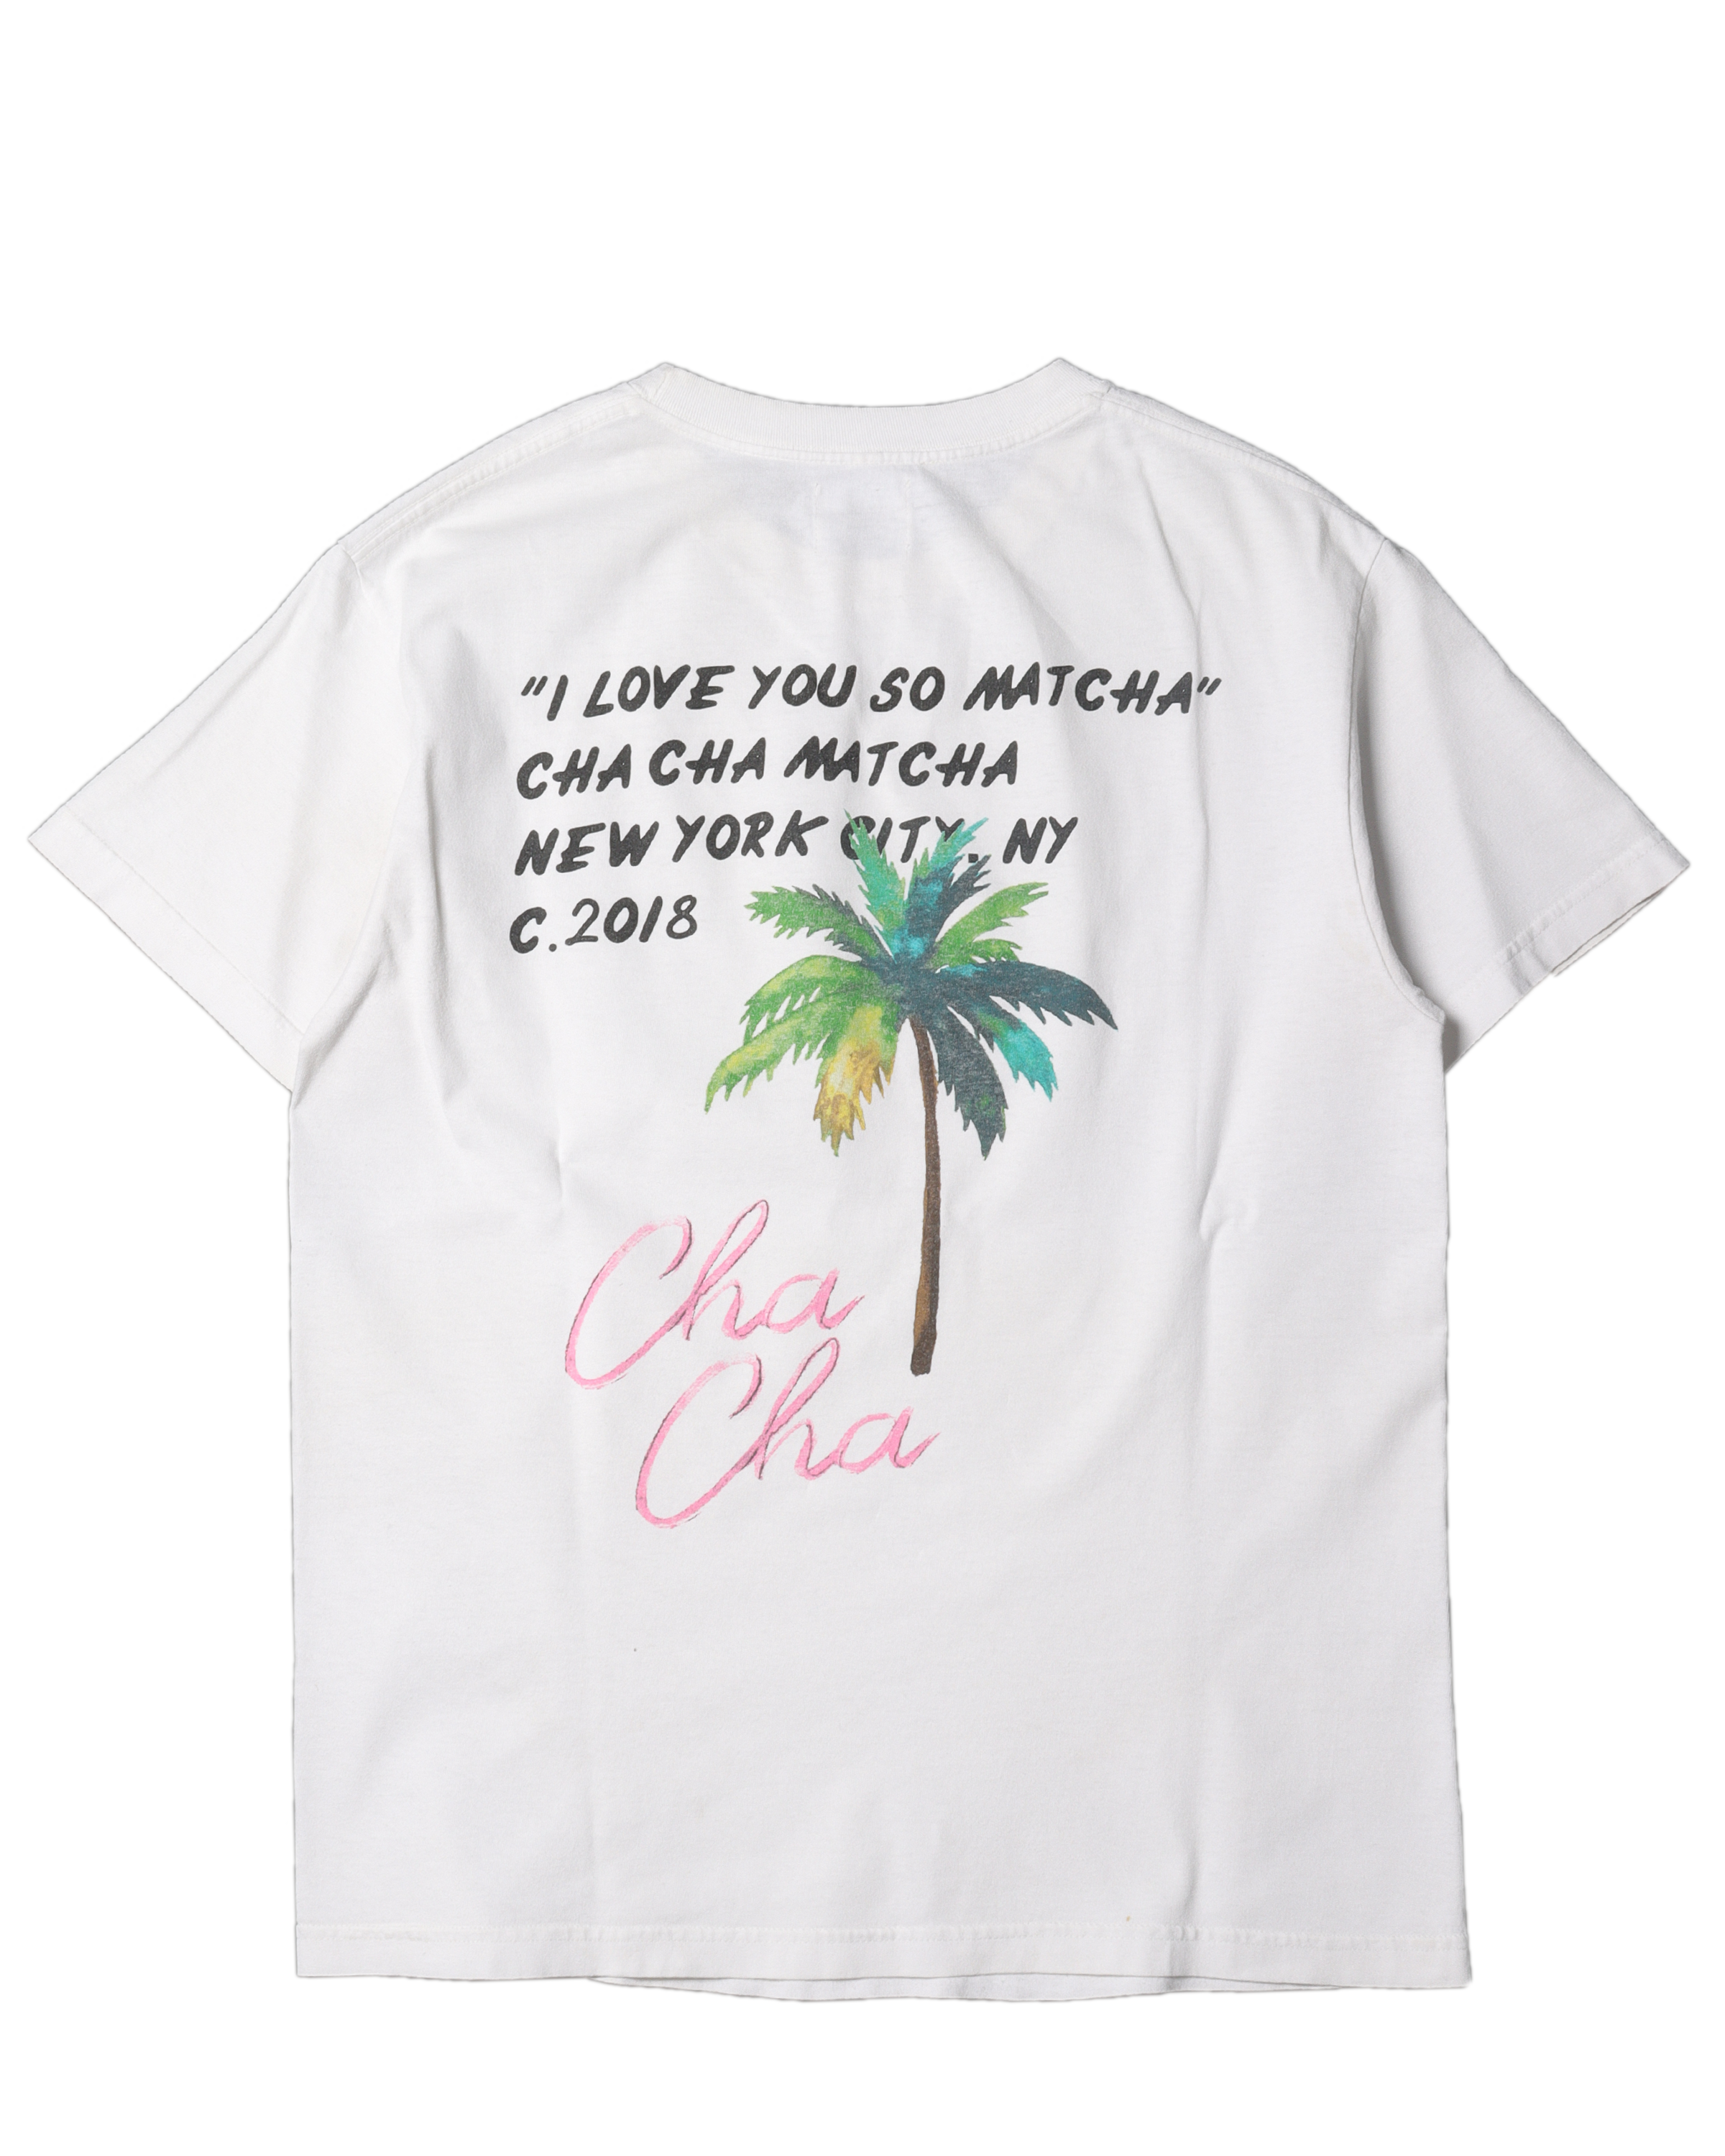 Virgil Abloh x Cha Cha Matcha T-Shirt